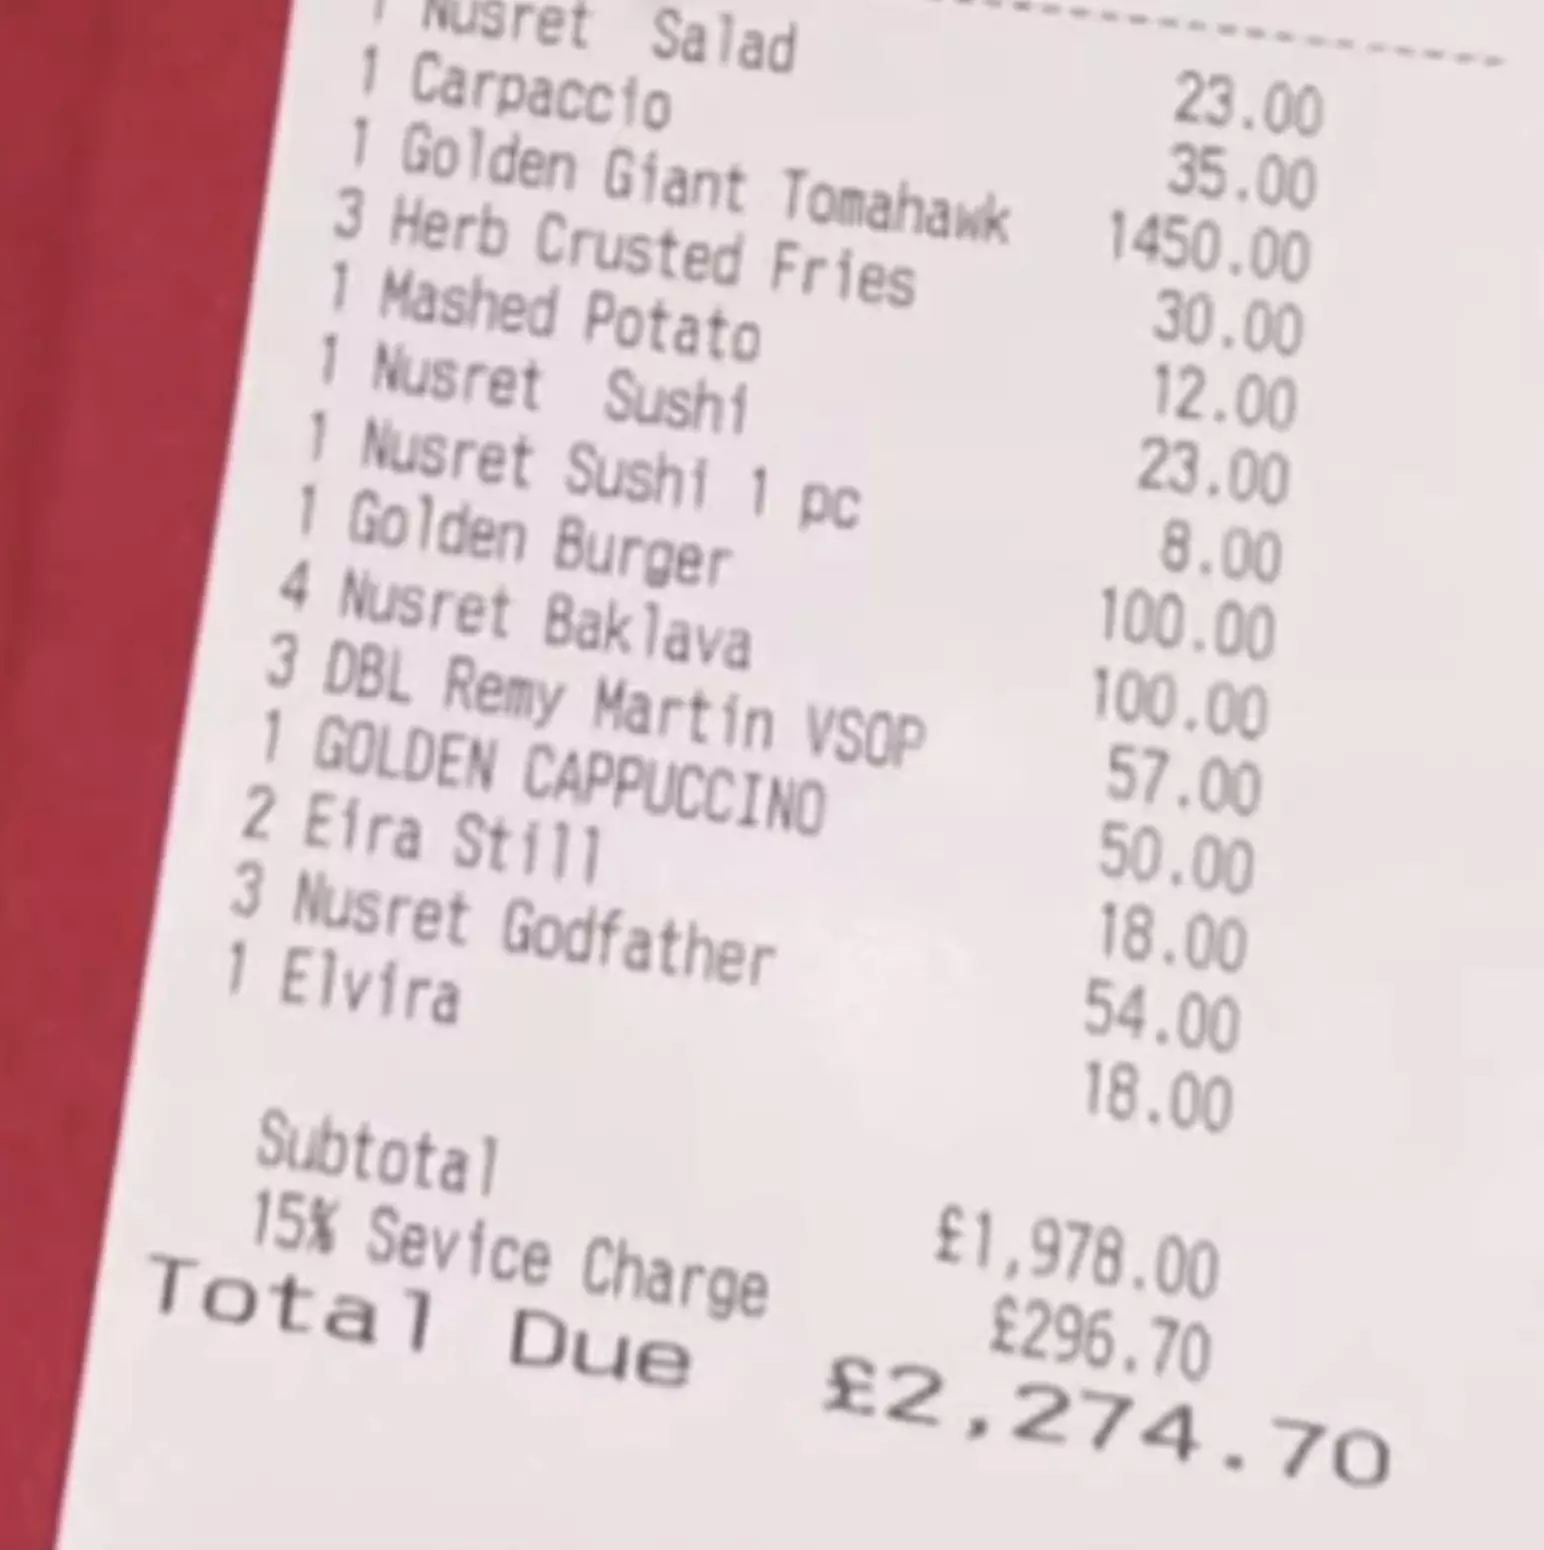 The eye-watering bill showing the £50 'Golden Cappucino'.